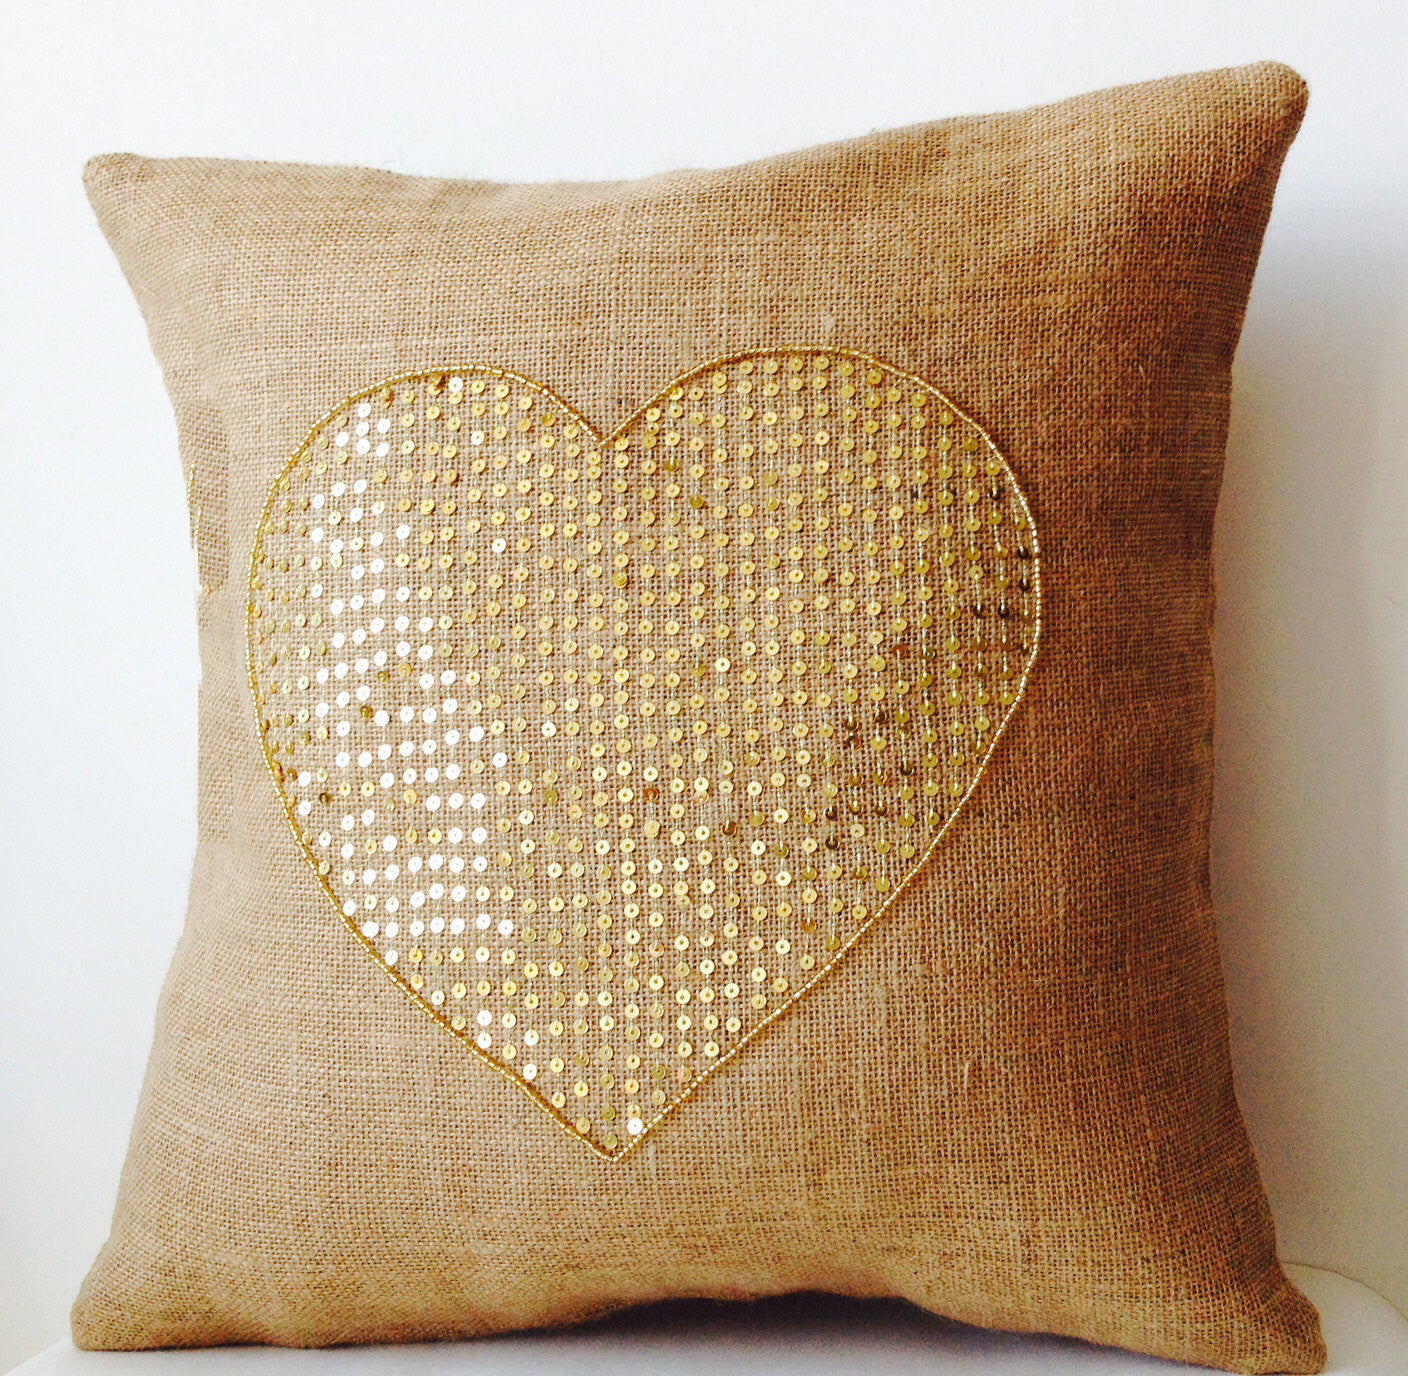 Handmade gold burlap pillow covers